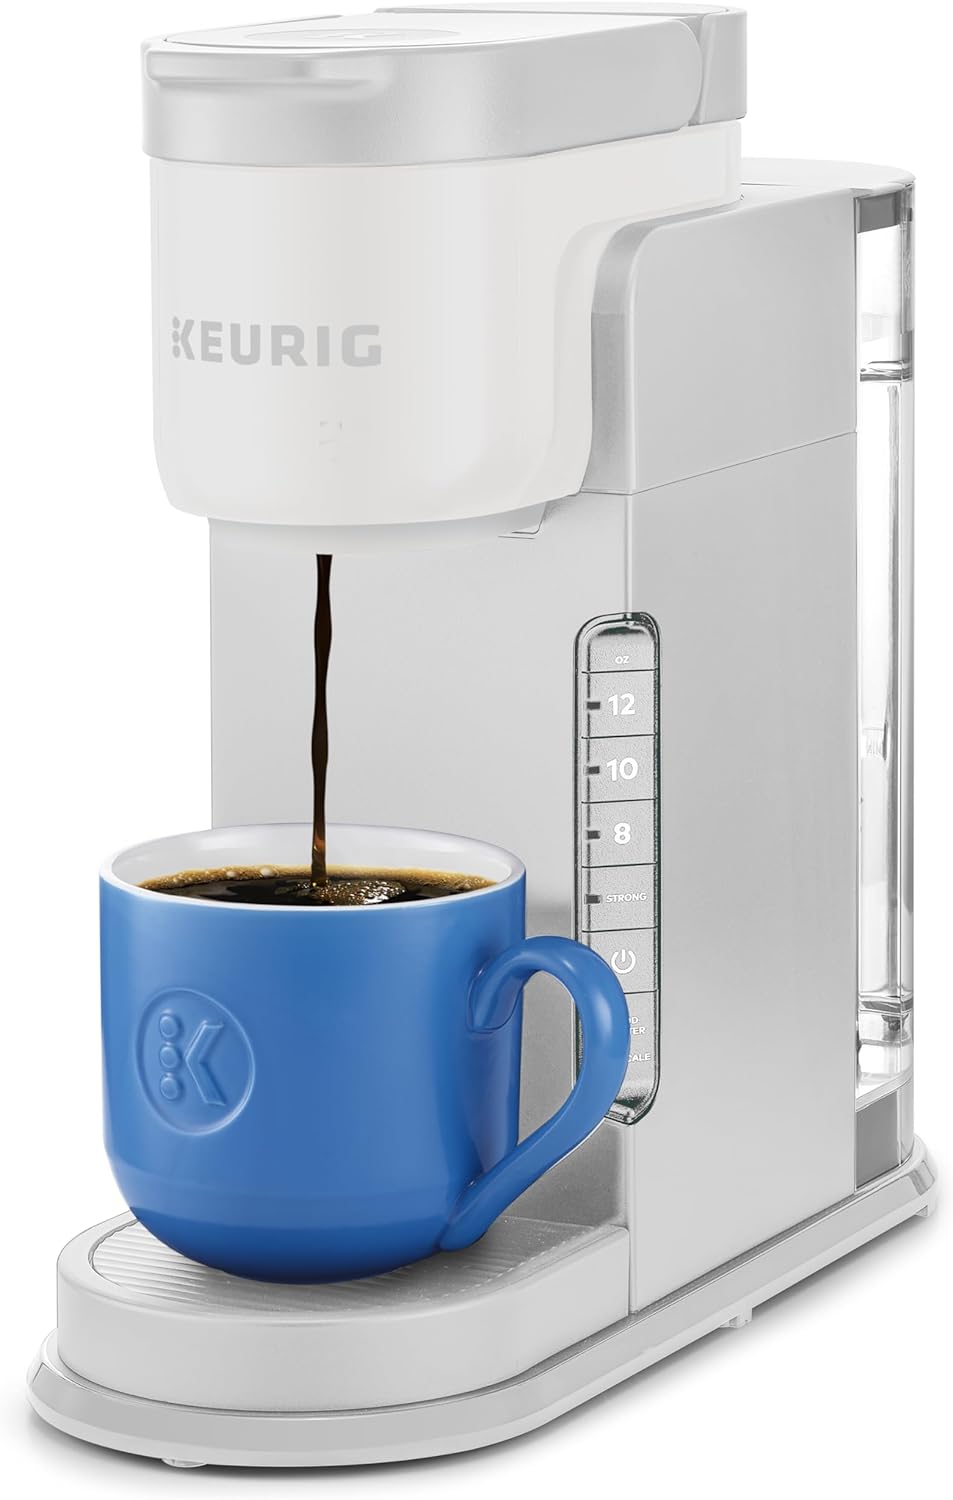 Espresso coffee machine by Keurig